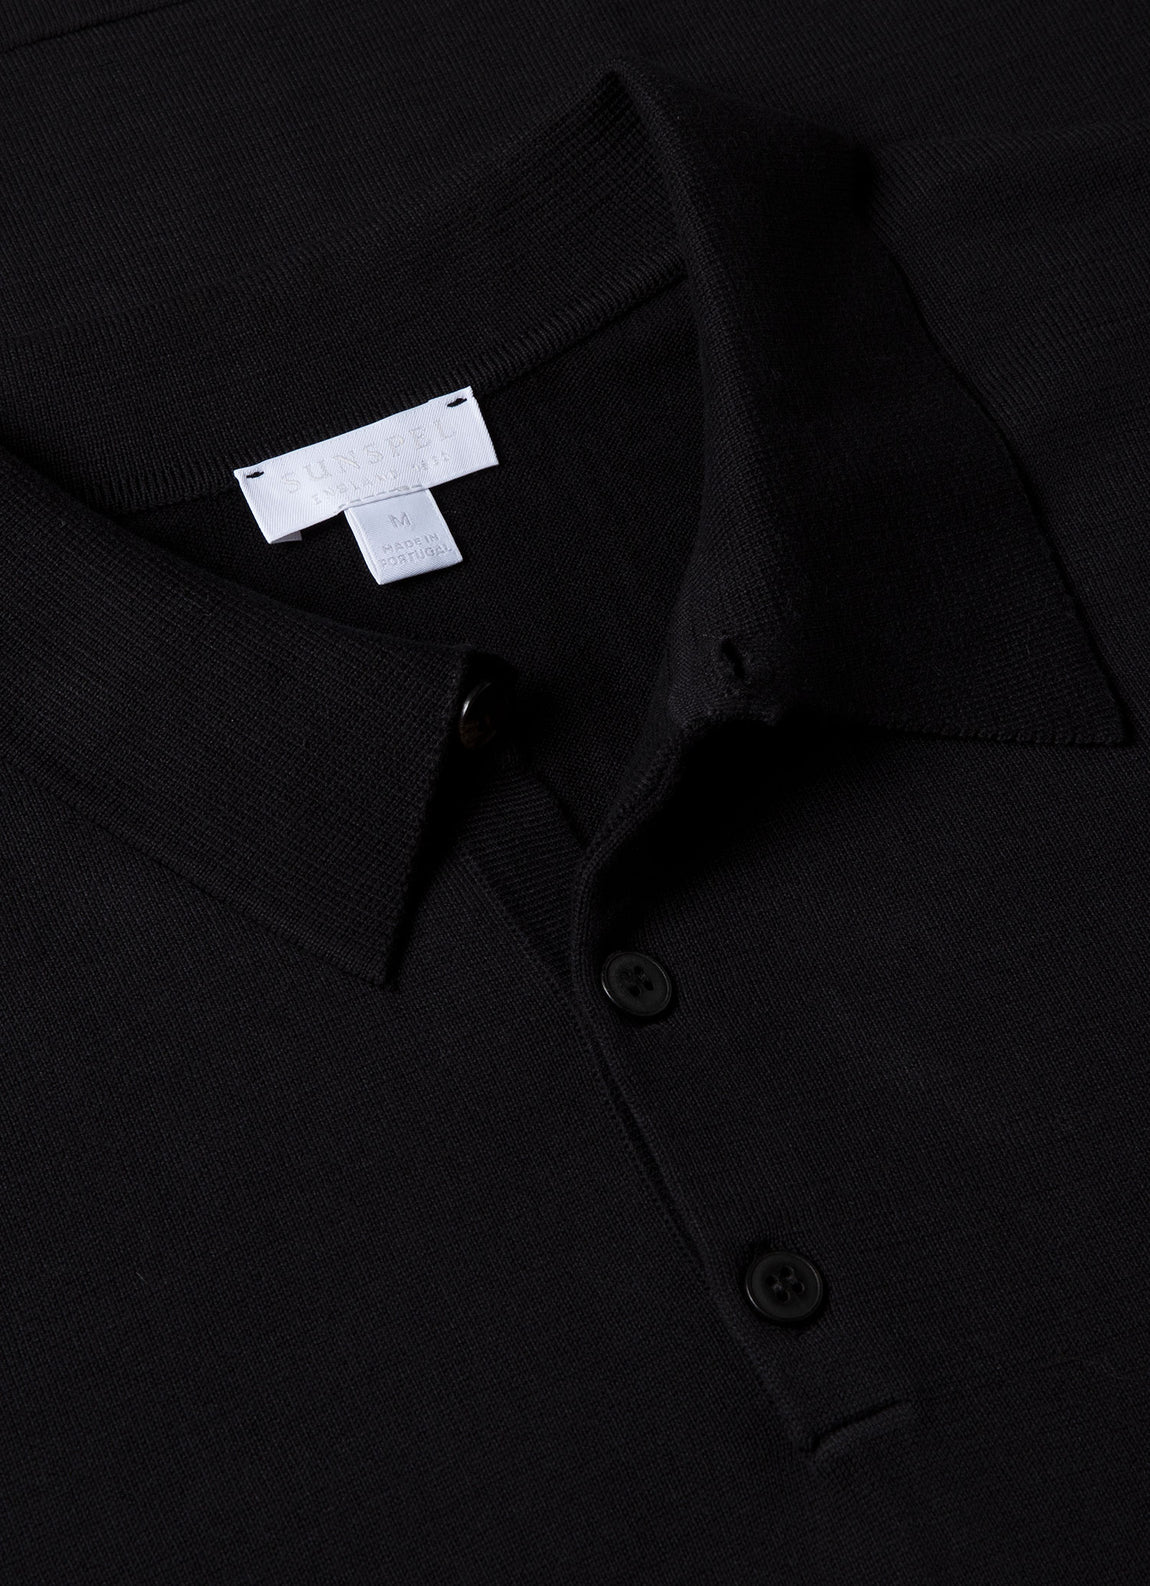 Men's Sea Island Cotton Polo Shirt in Black | Sunspel